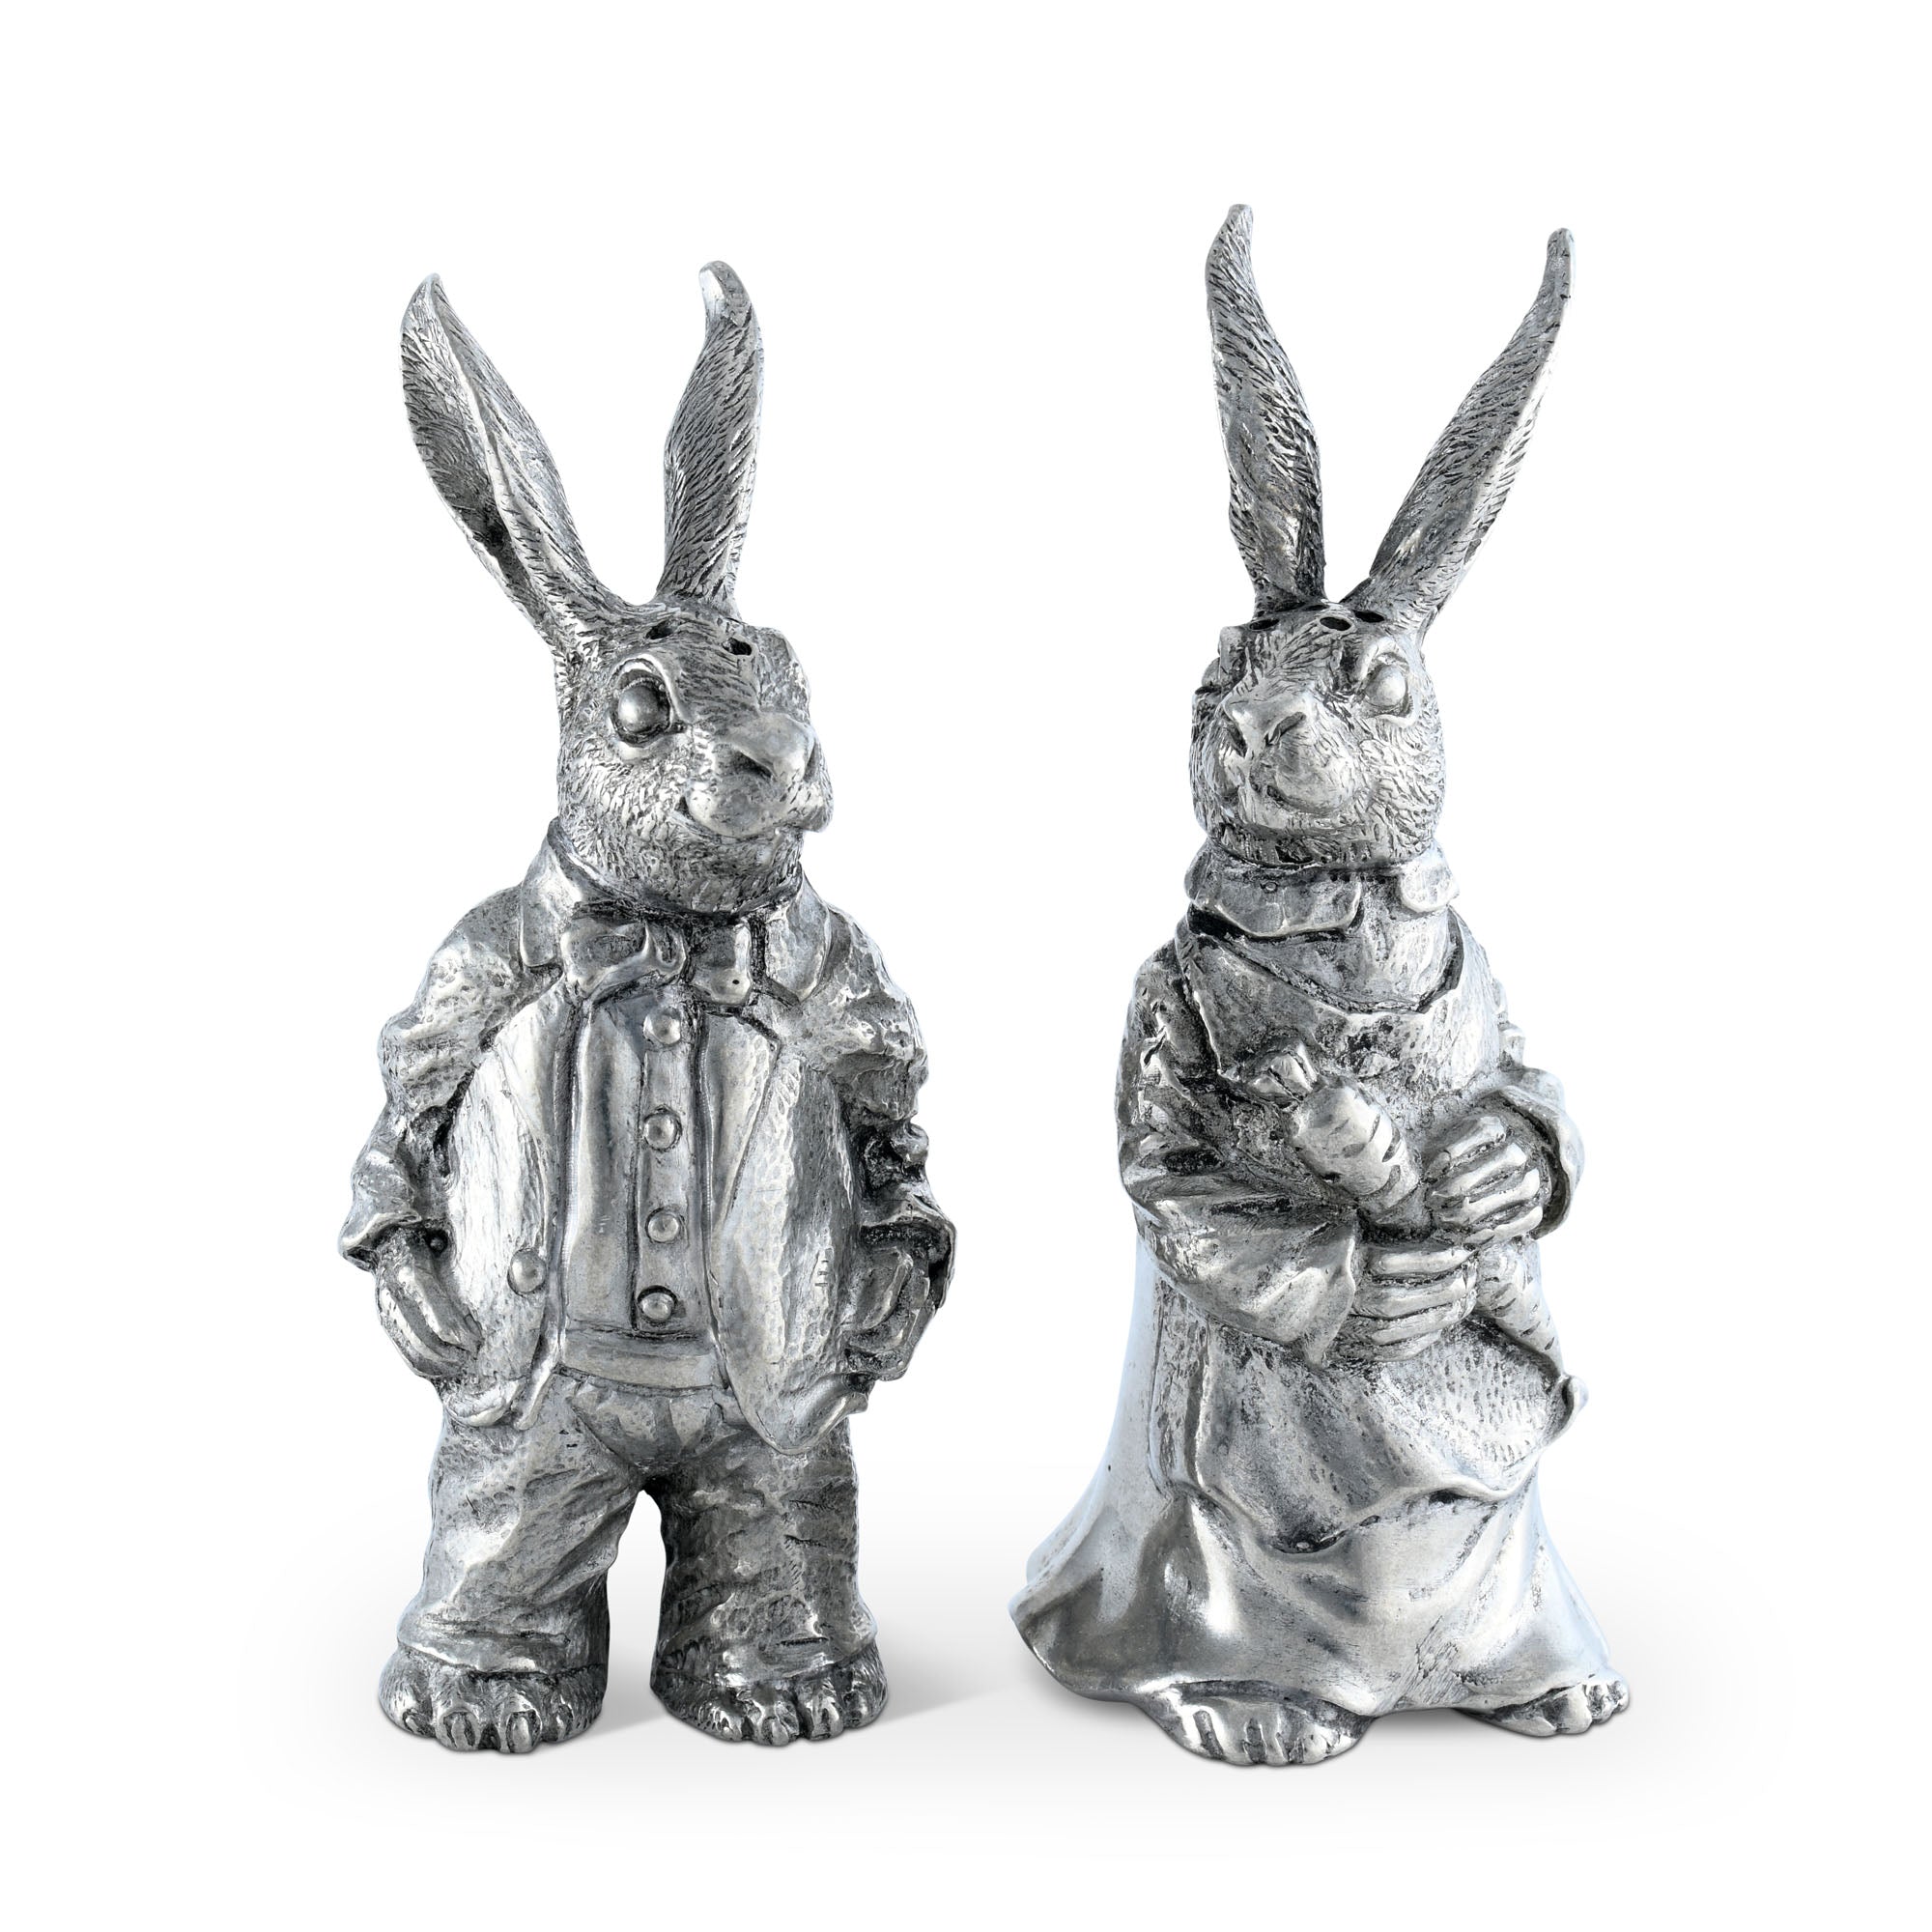 Vagabond House Dressed Rabbits Salt & Pepper Set Product Image